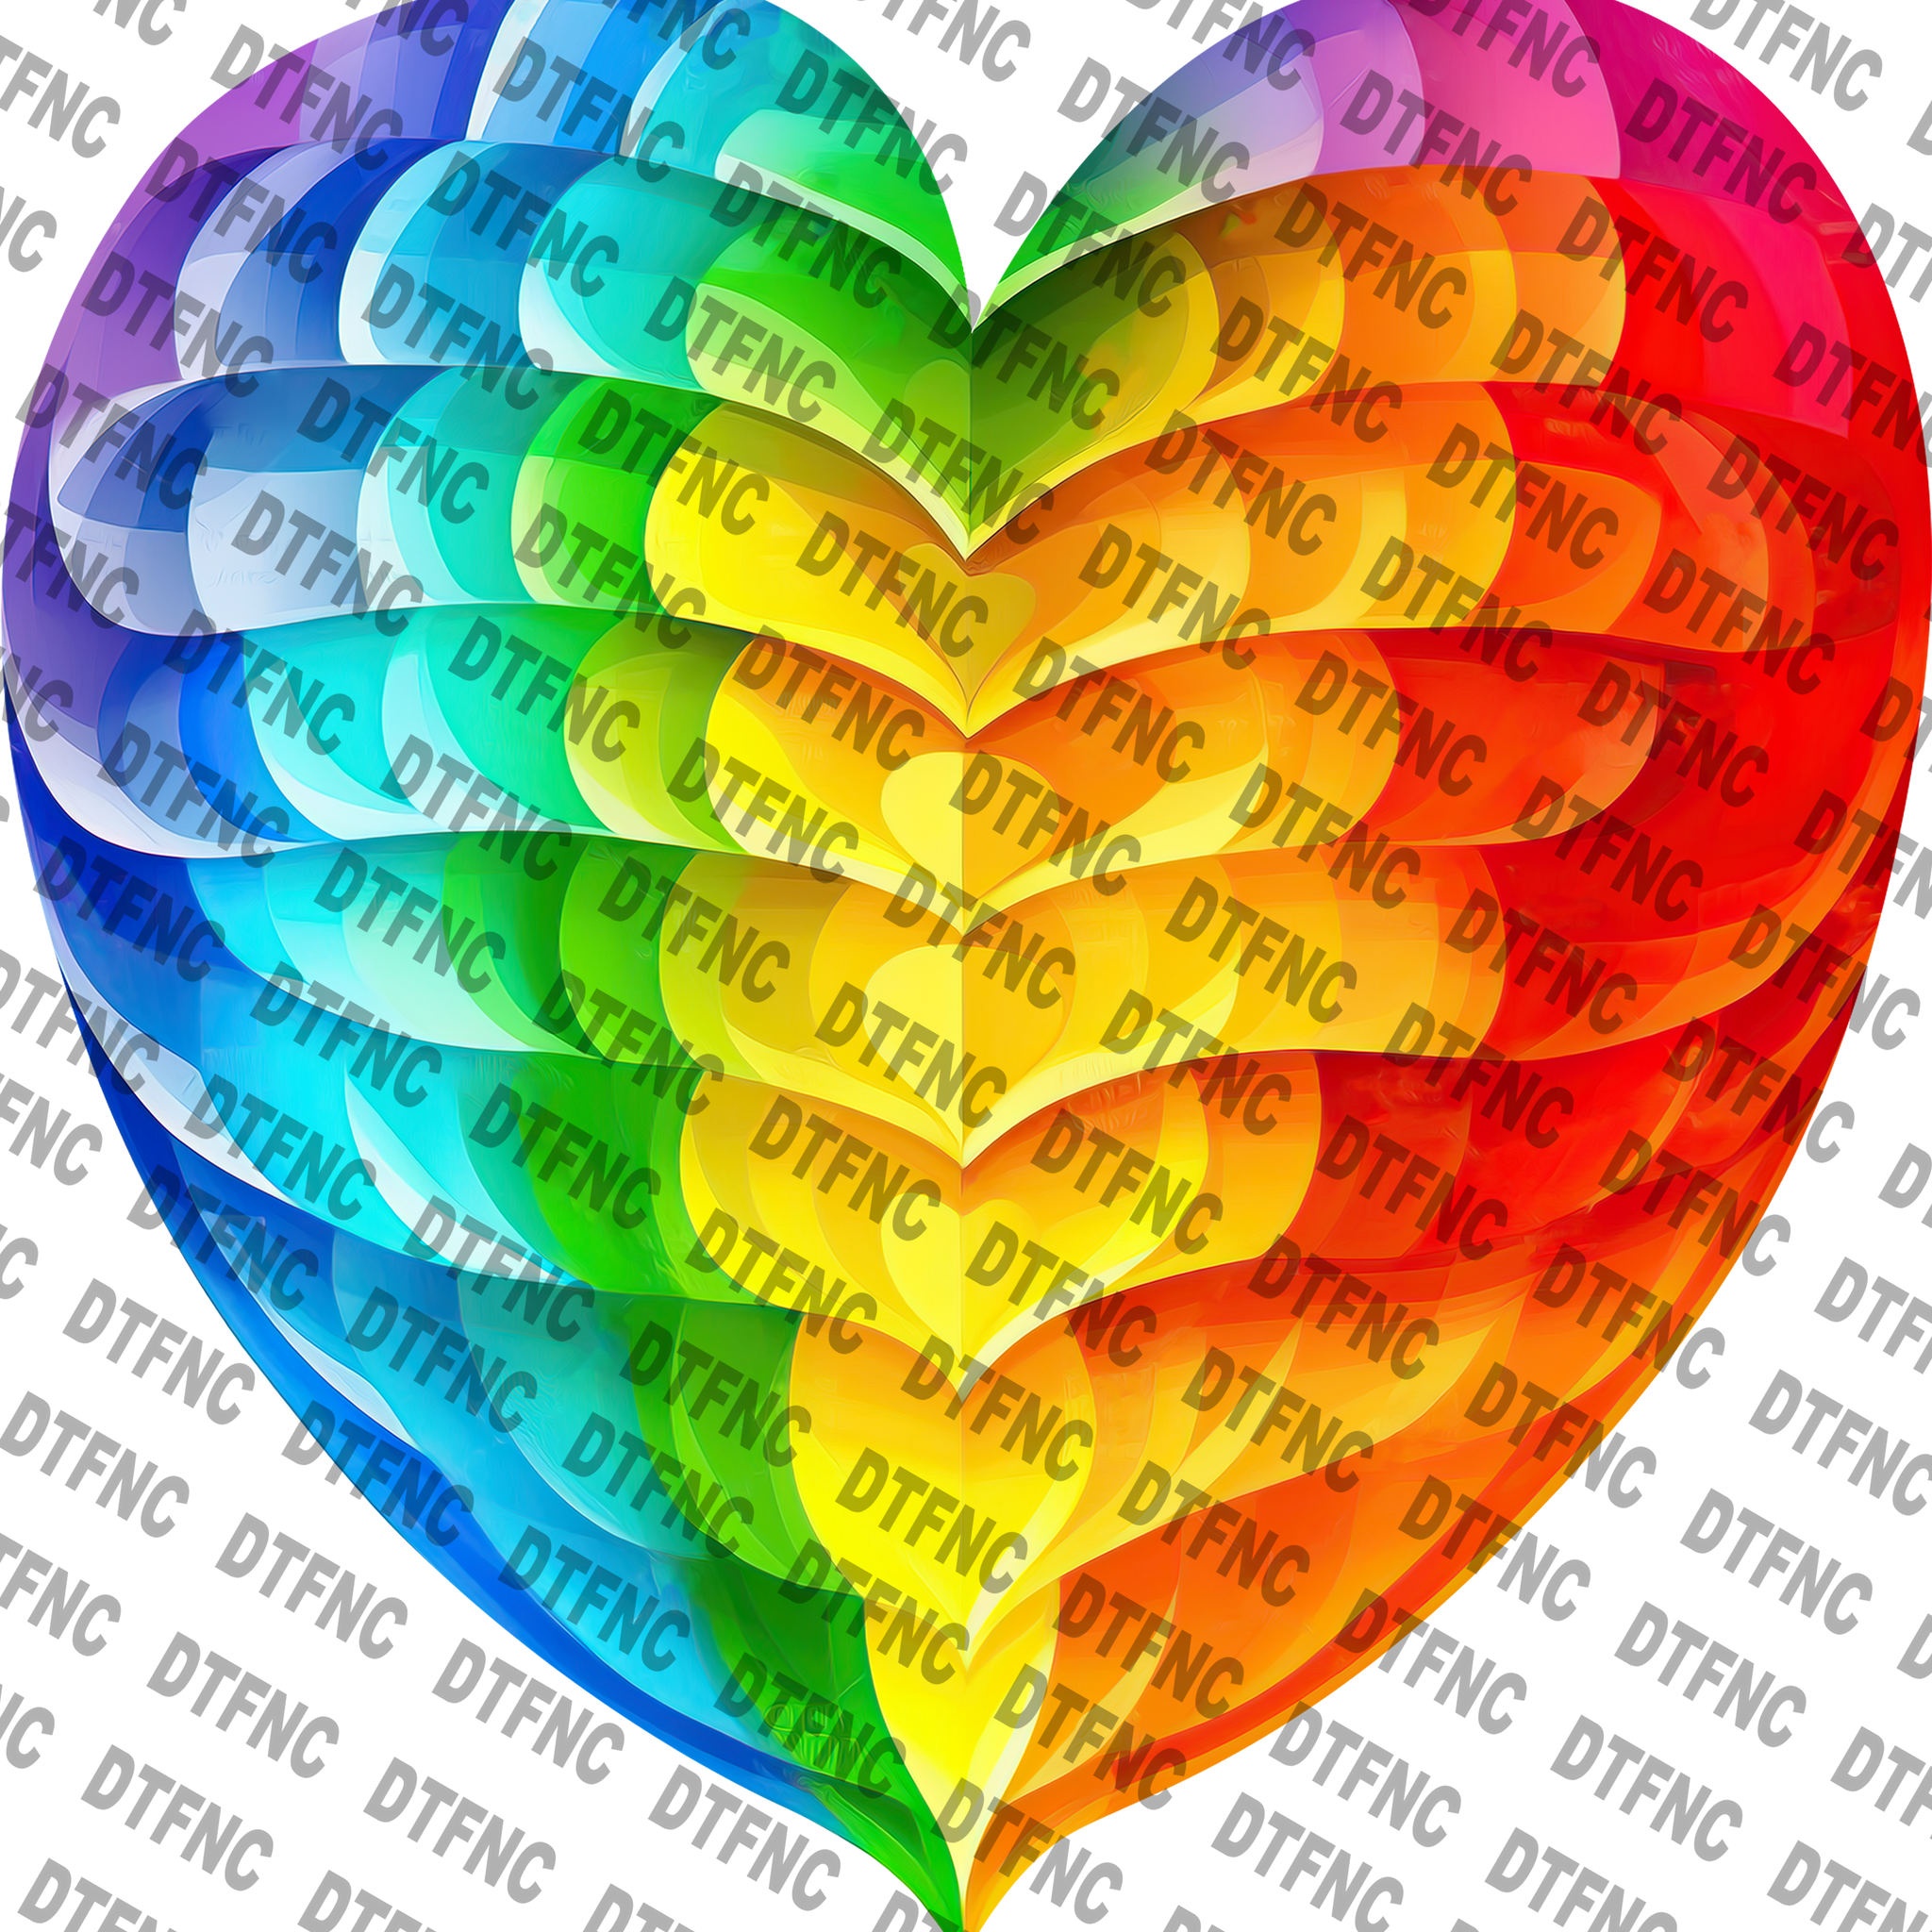 LGBTQ - Pride Heart